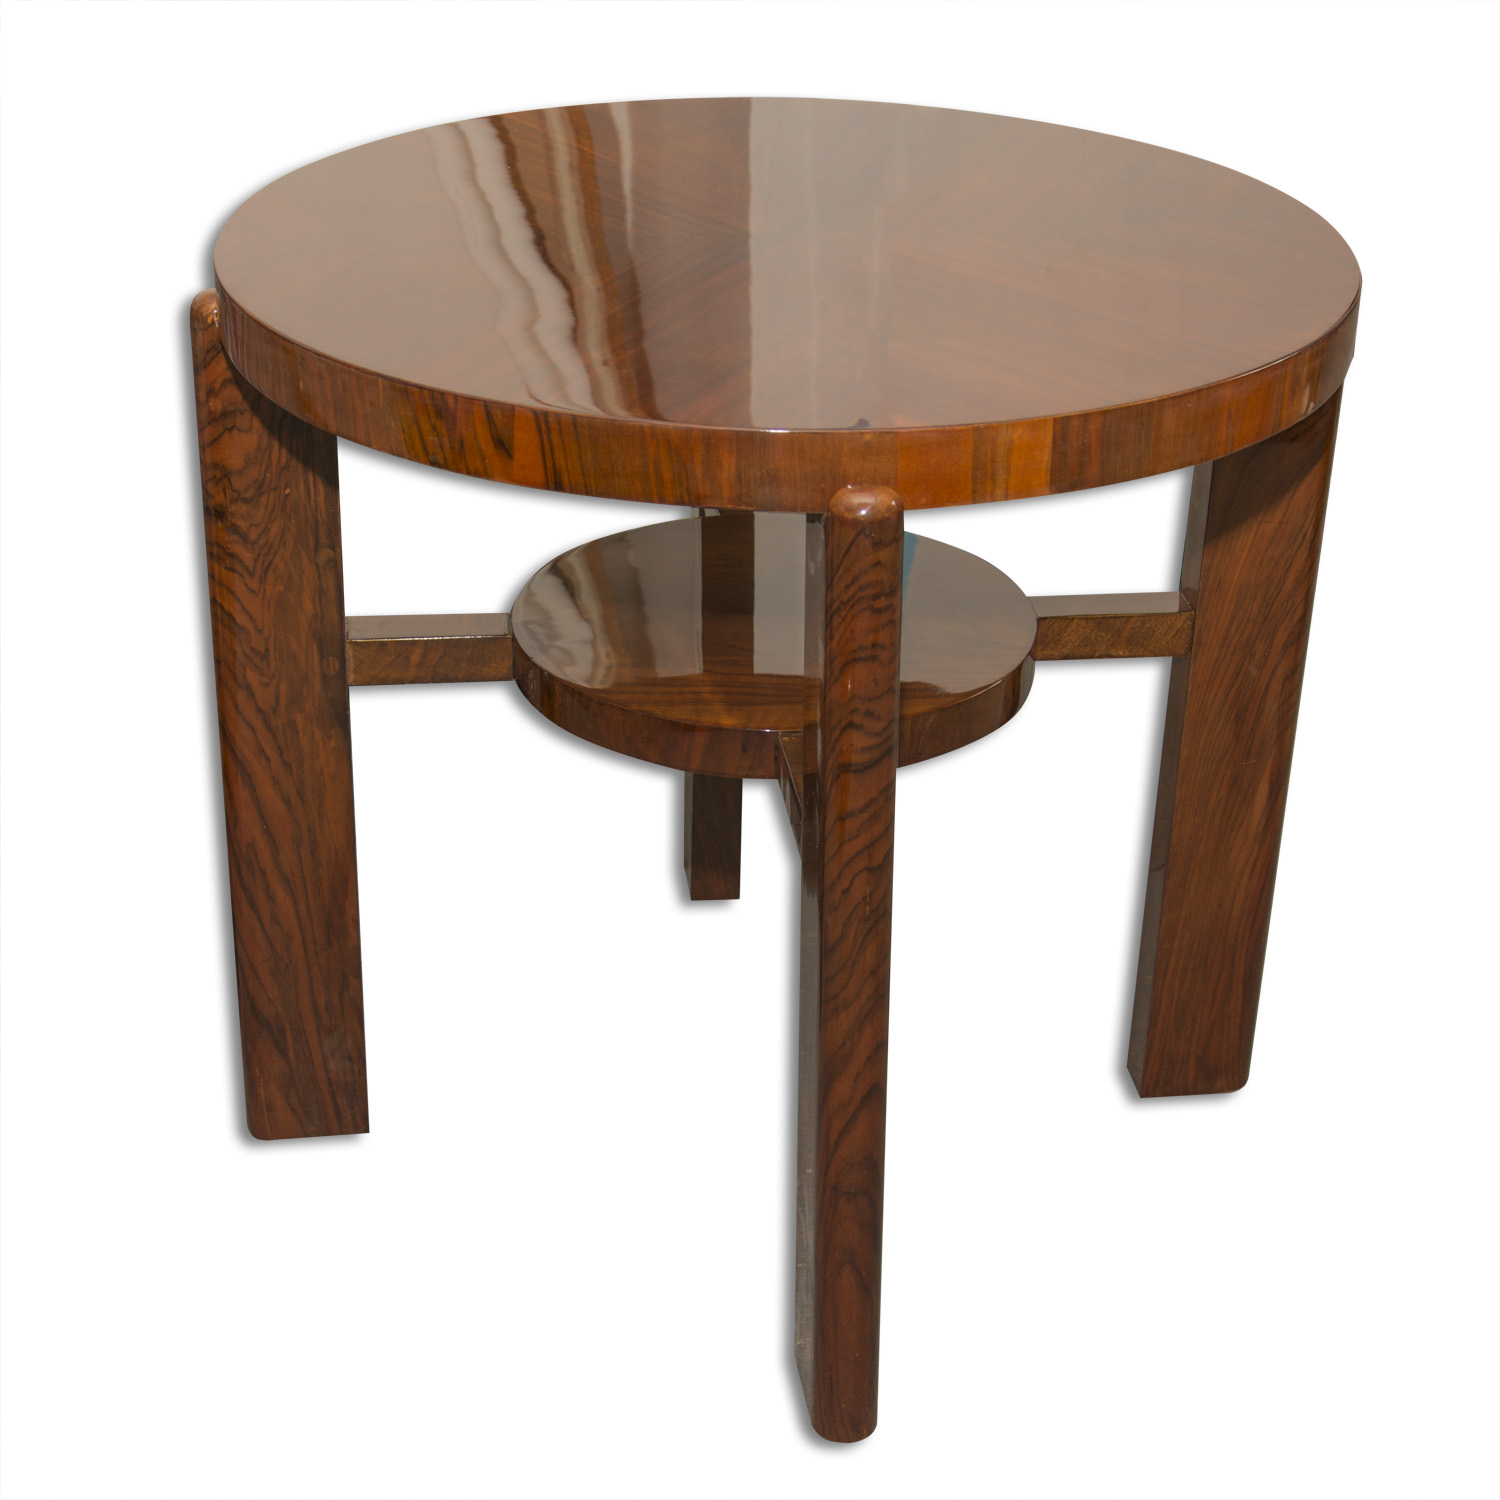 Czech Round Coffee Table In Walnut, designed by Jindrich Halabala, 1930´s